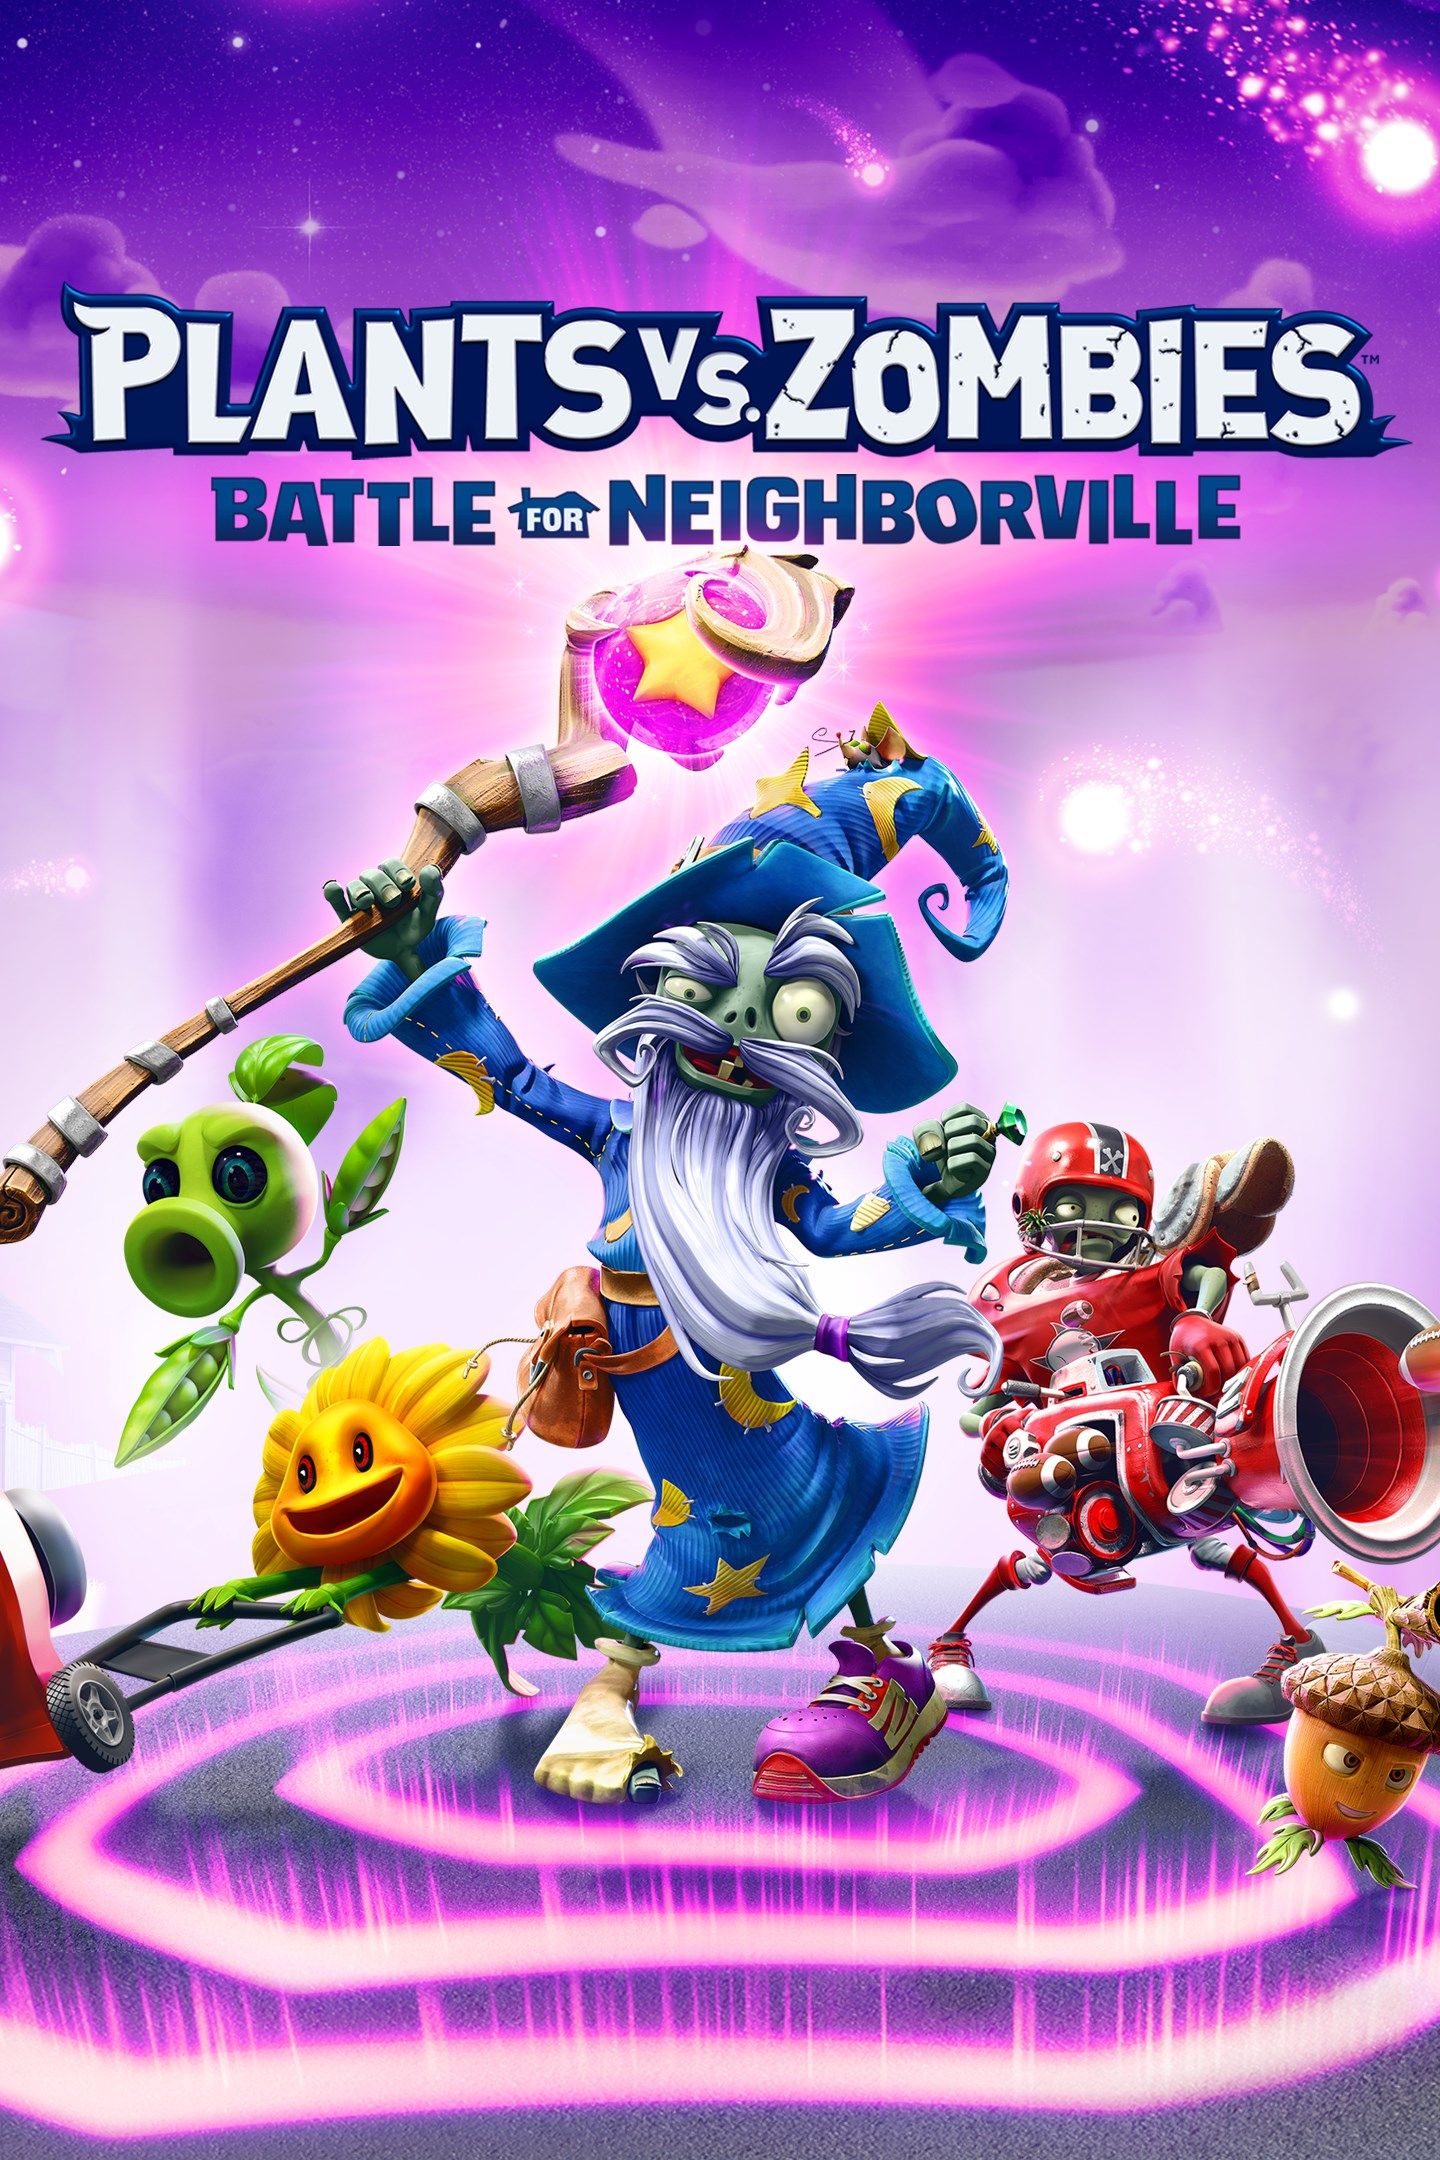 Игра битве зомби против растений. Hfcntybz ghjnbd PJV,B ,bndf PF YTQ,thdbkm. Plants vs. Zombies™: битва за нейборвиль. Растения против зомби битва за нейборвиль. Plants vs. Zombies™: битва за нейборвиль издание Deluxe.